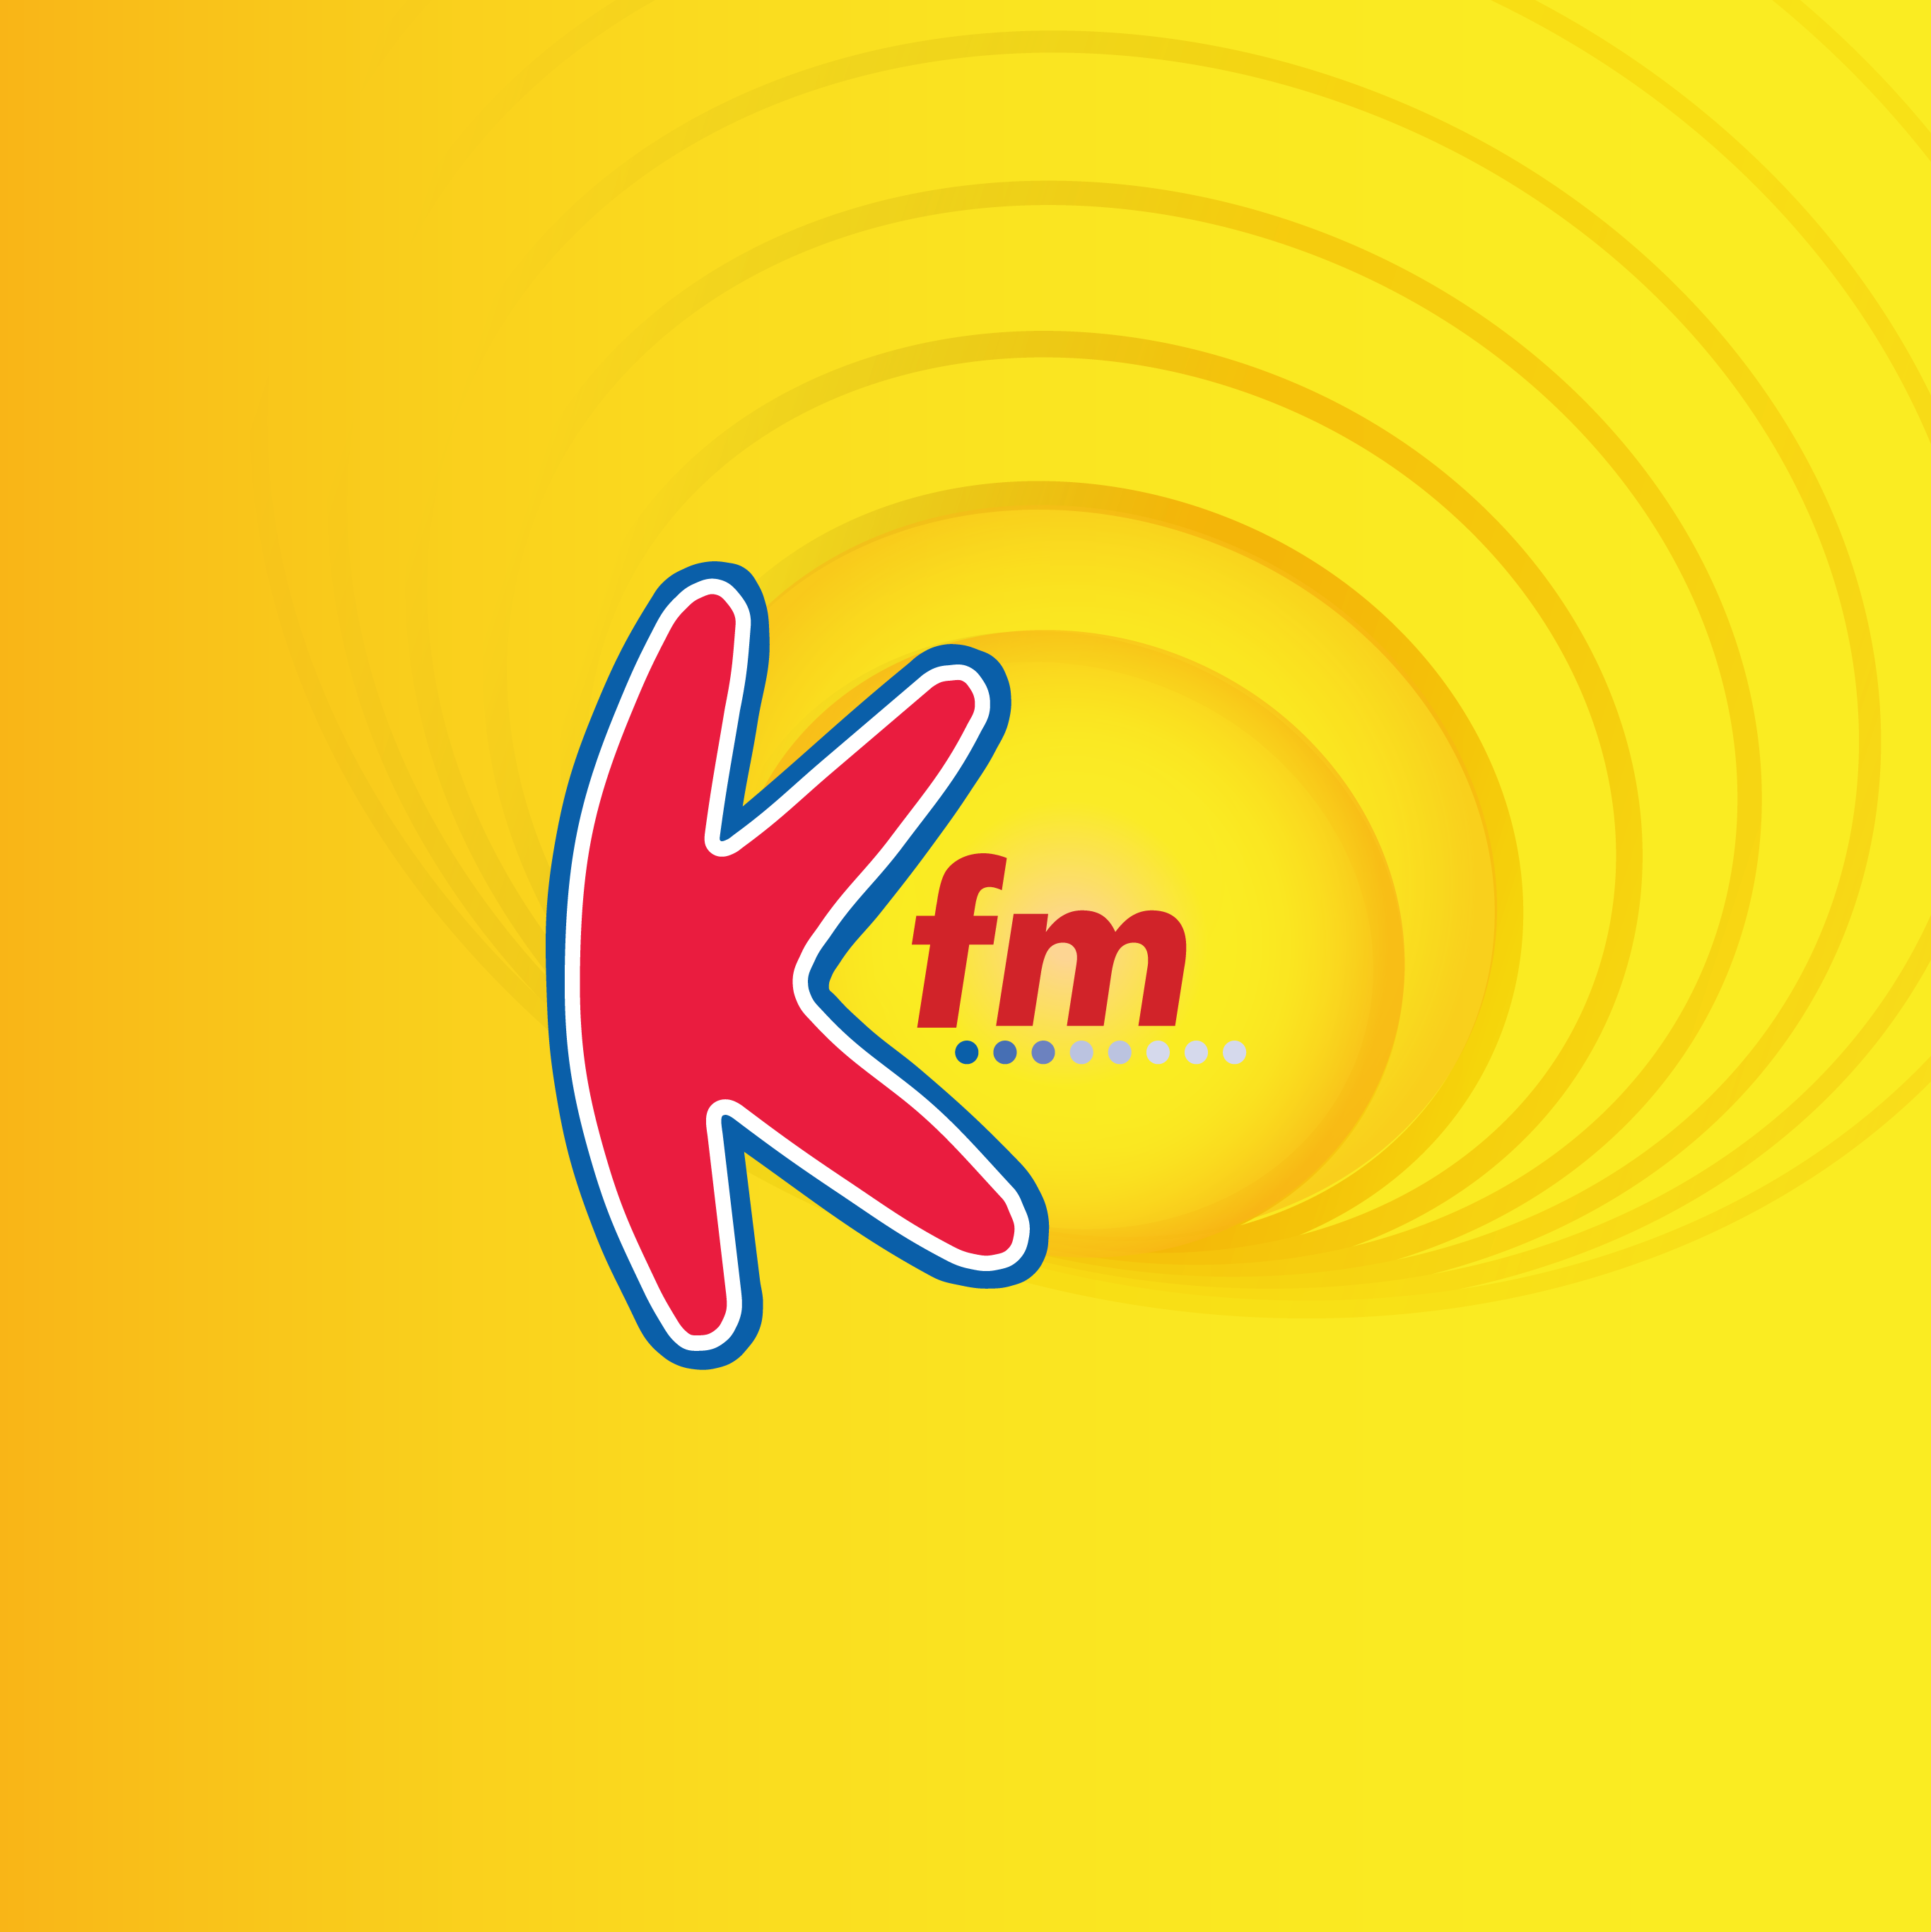 Kildare's Kfm Logo